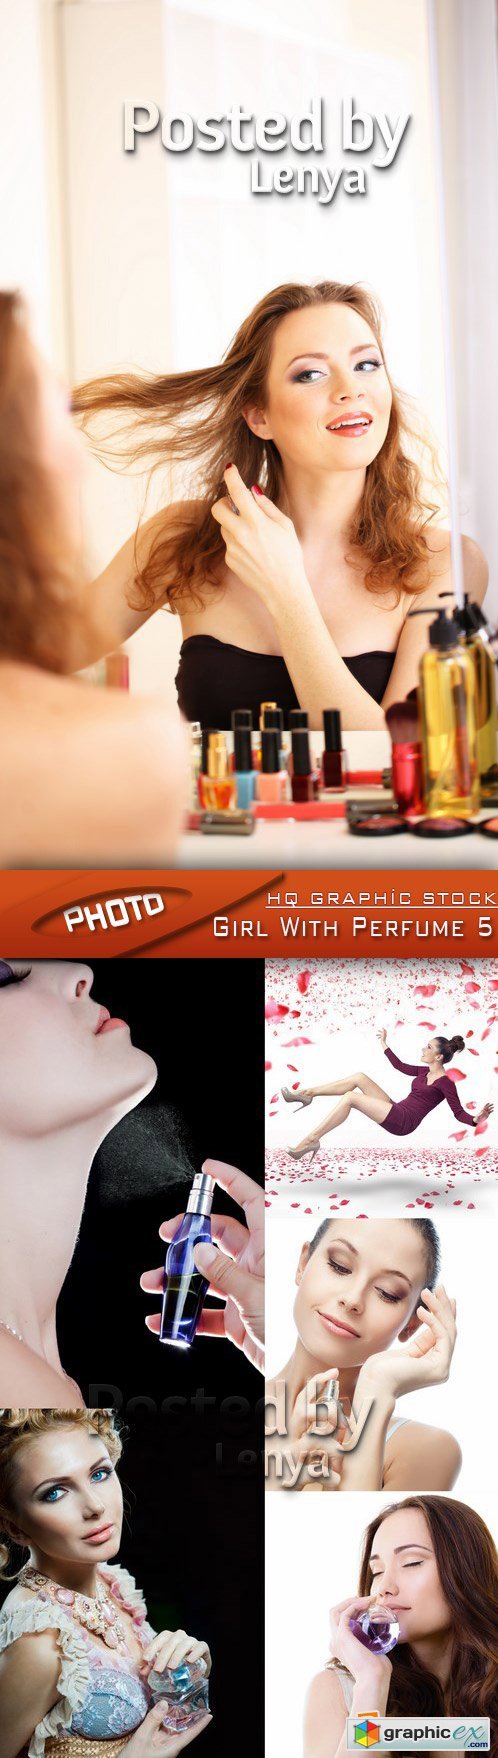 Stock Photo - Girl With Perfume 5